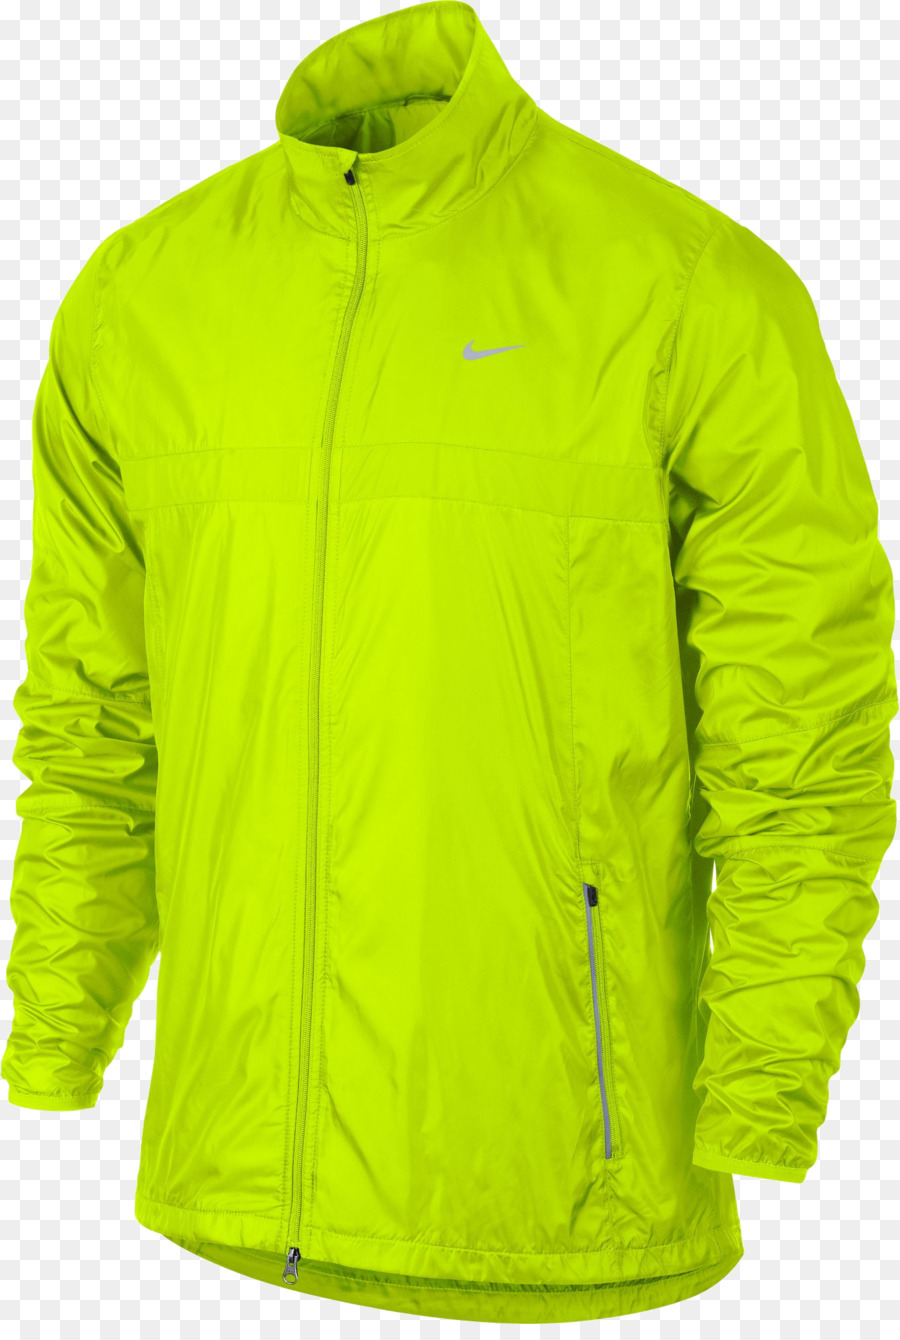 T-shirt Jacket Nike Windbreaker Clothing - jacket png download - 1360*2000 - Free Transparent Tshirt png Download.